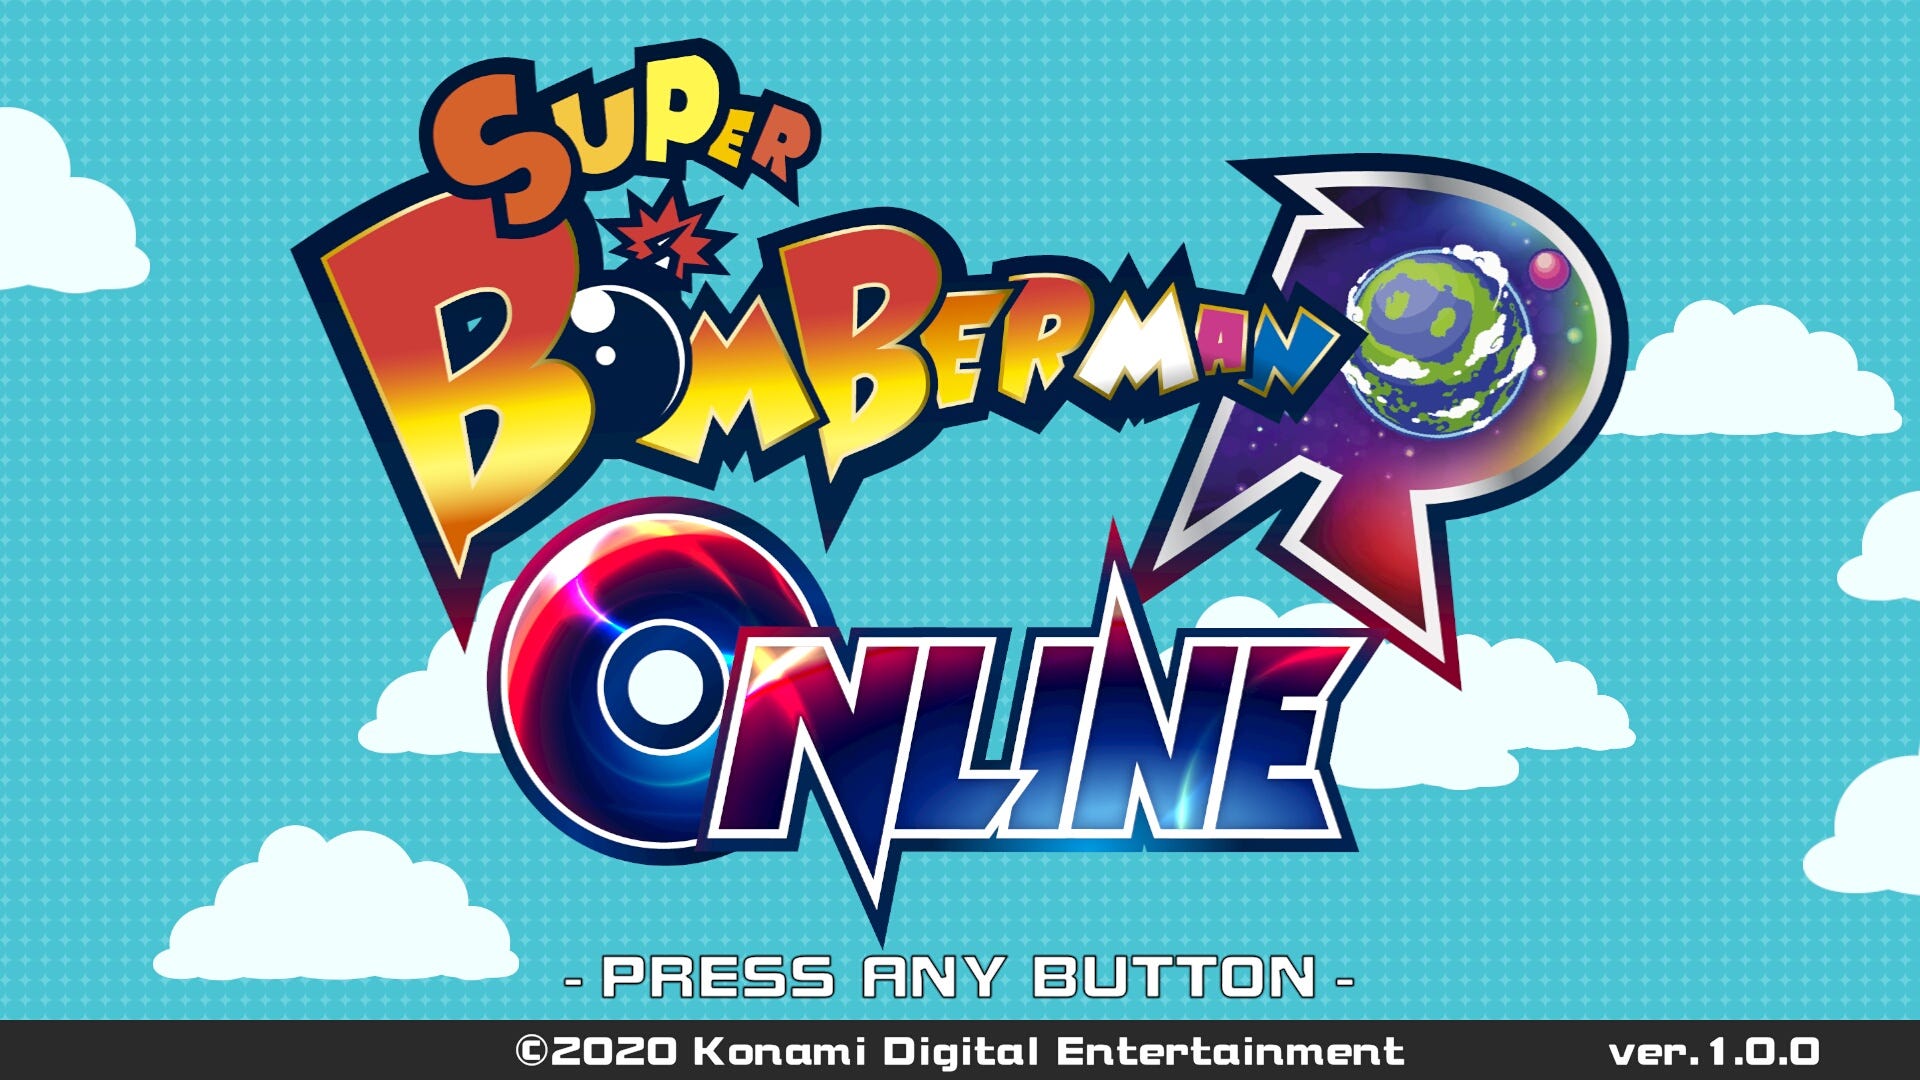 Game Review: Super Bomberman R Online on Google Stadia